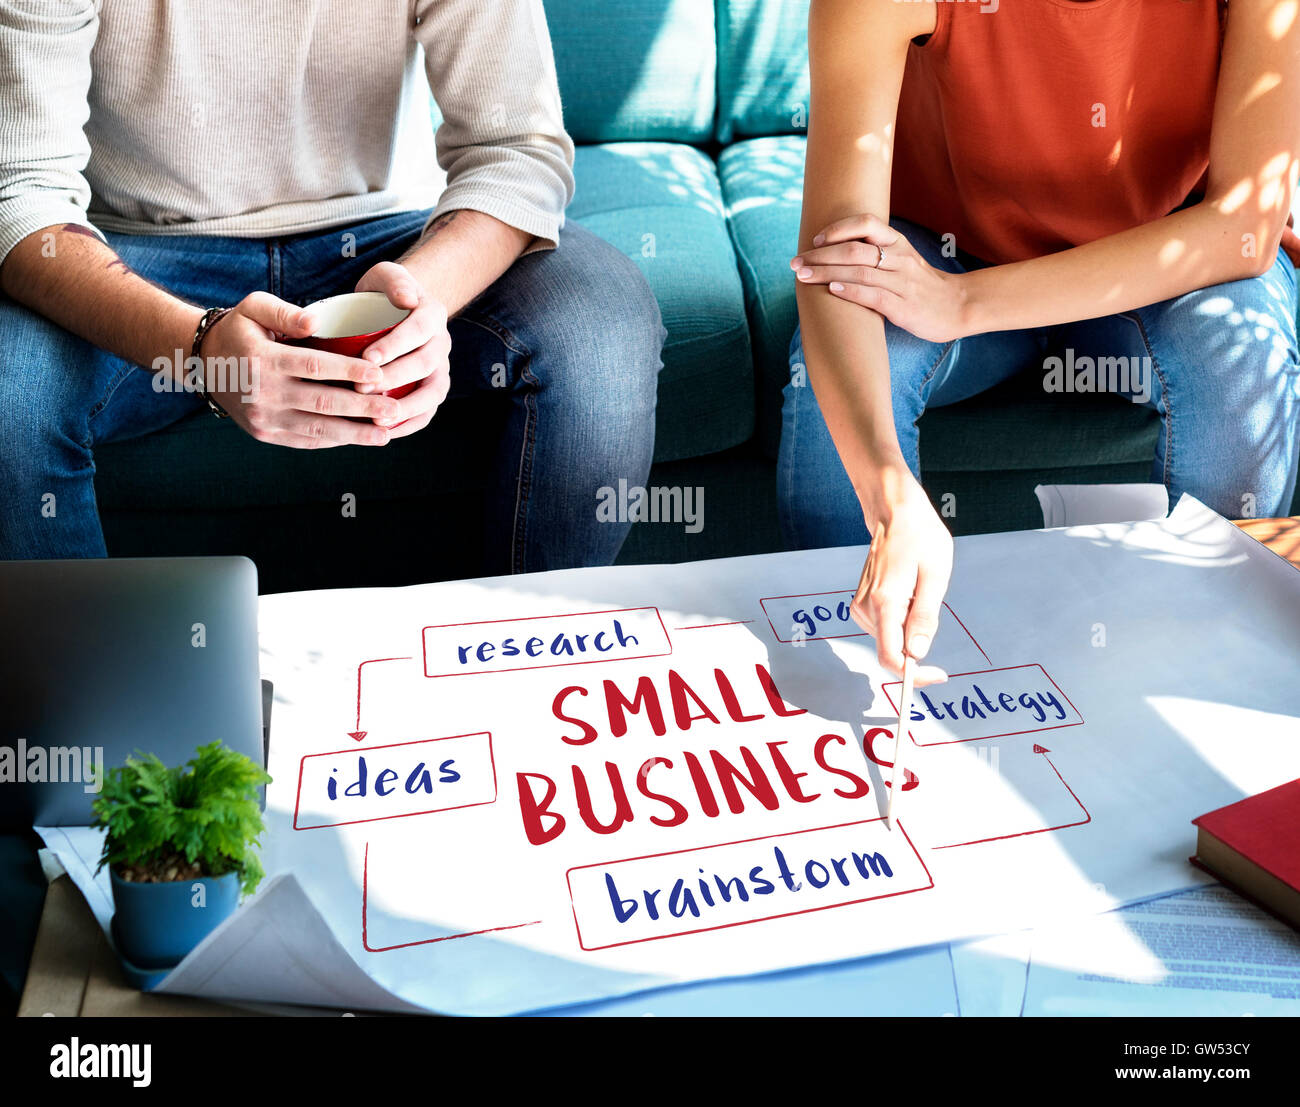 Startup Business Entrepreneurship Ideas Concept Stock Photo